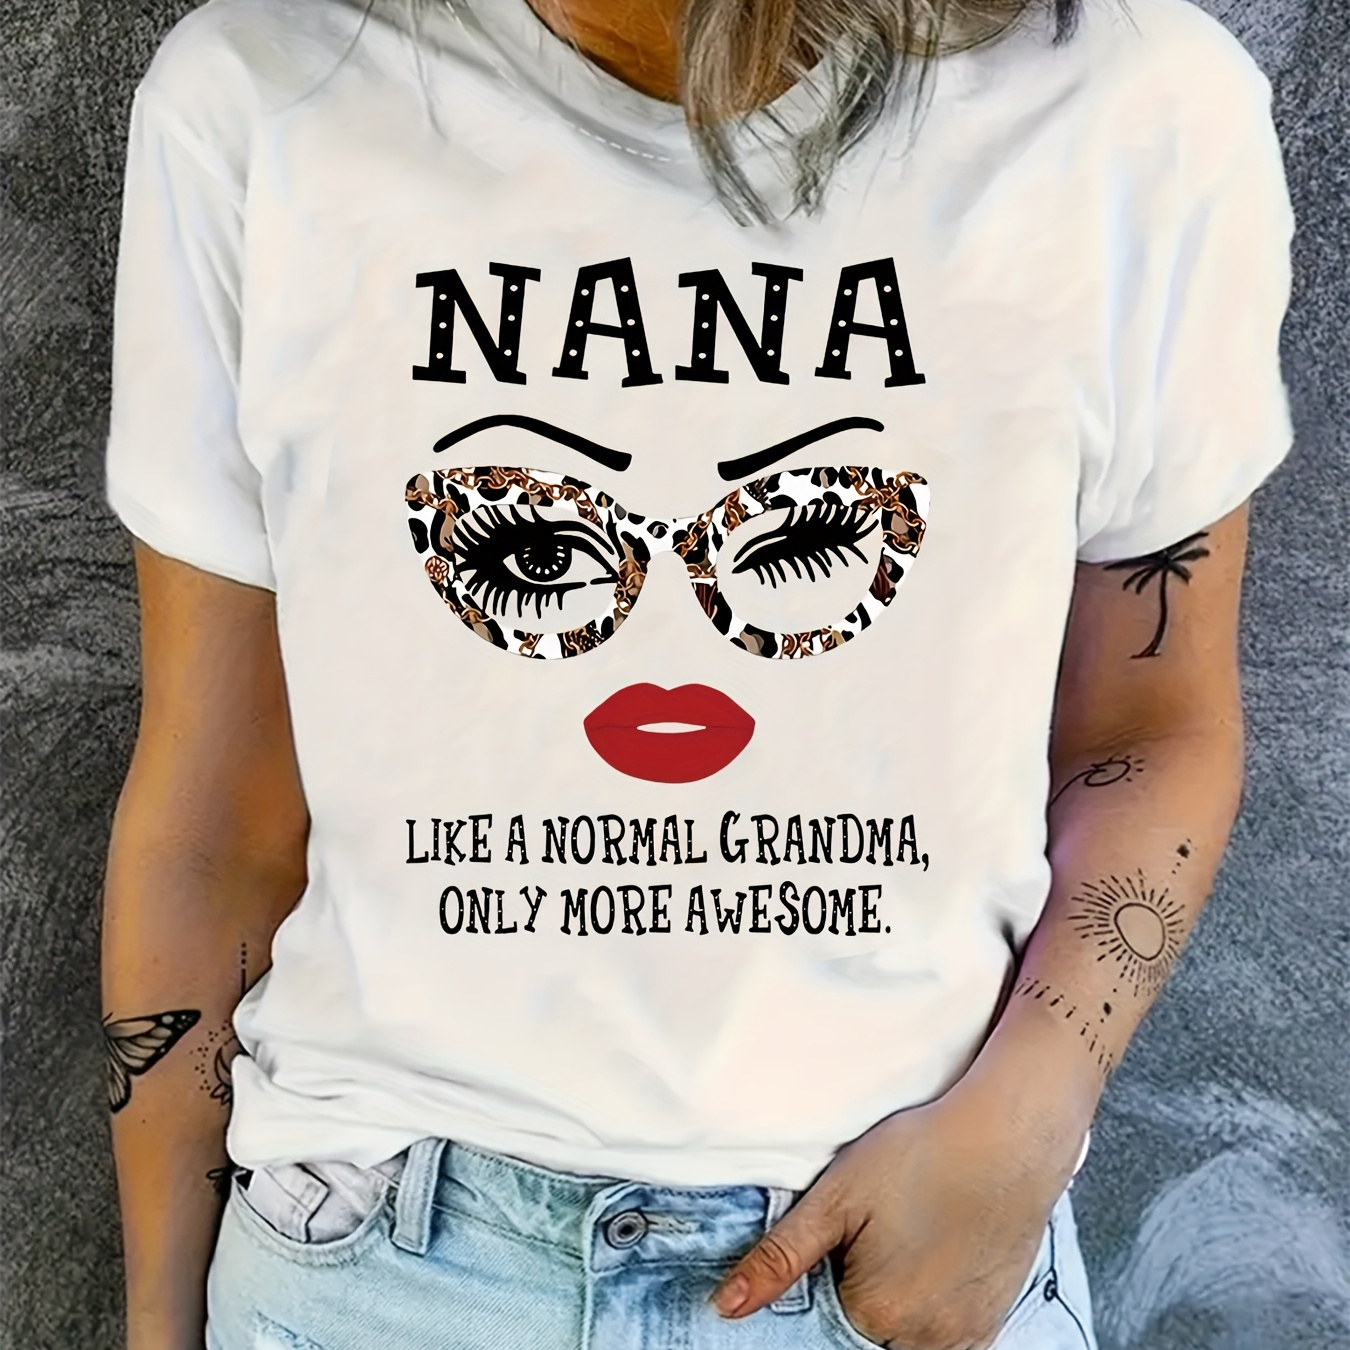 

Nana Print Crew Neck T-shirt, Short Sleeve Casual Top For Summer & Spring, Women's Clothing